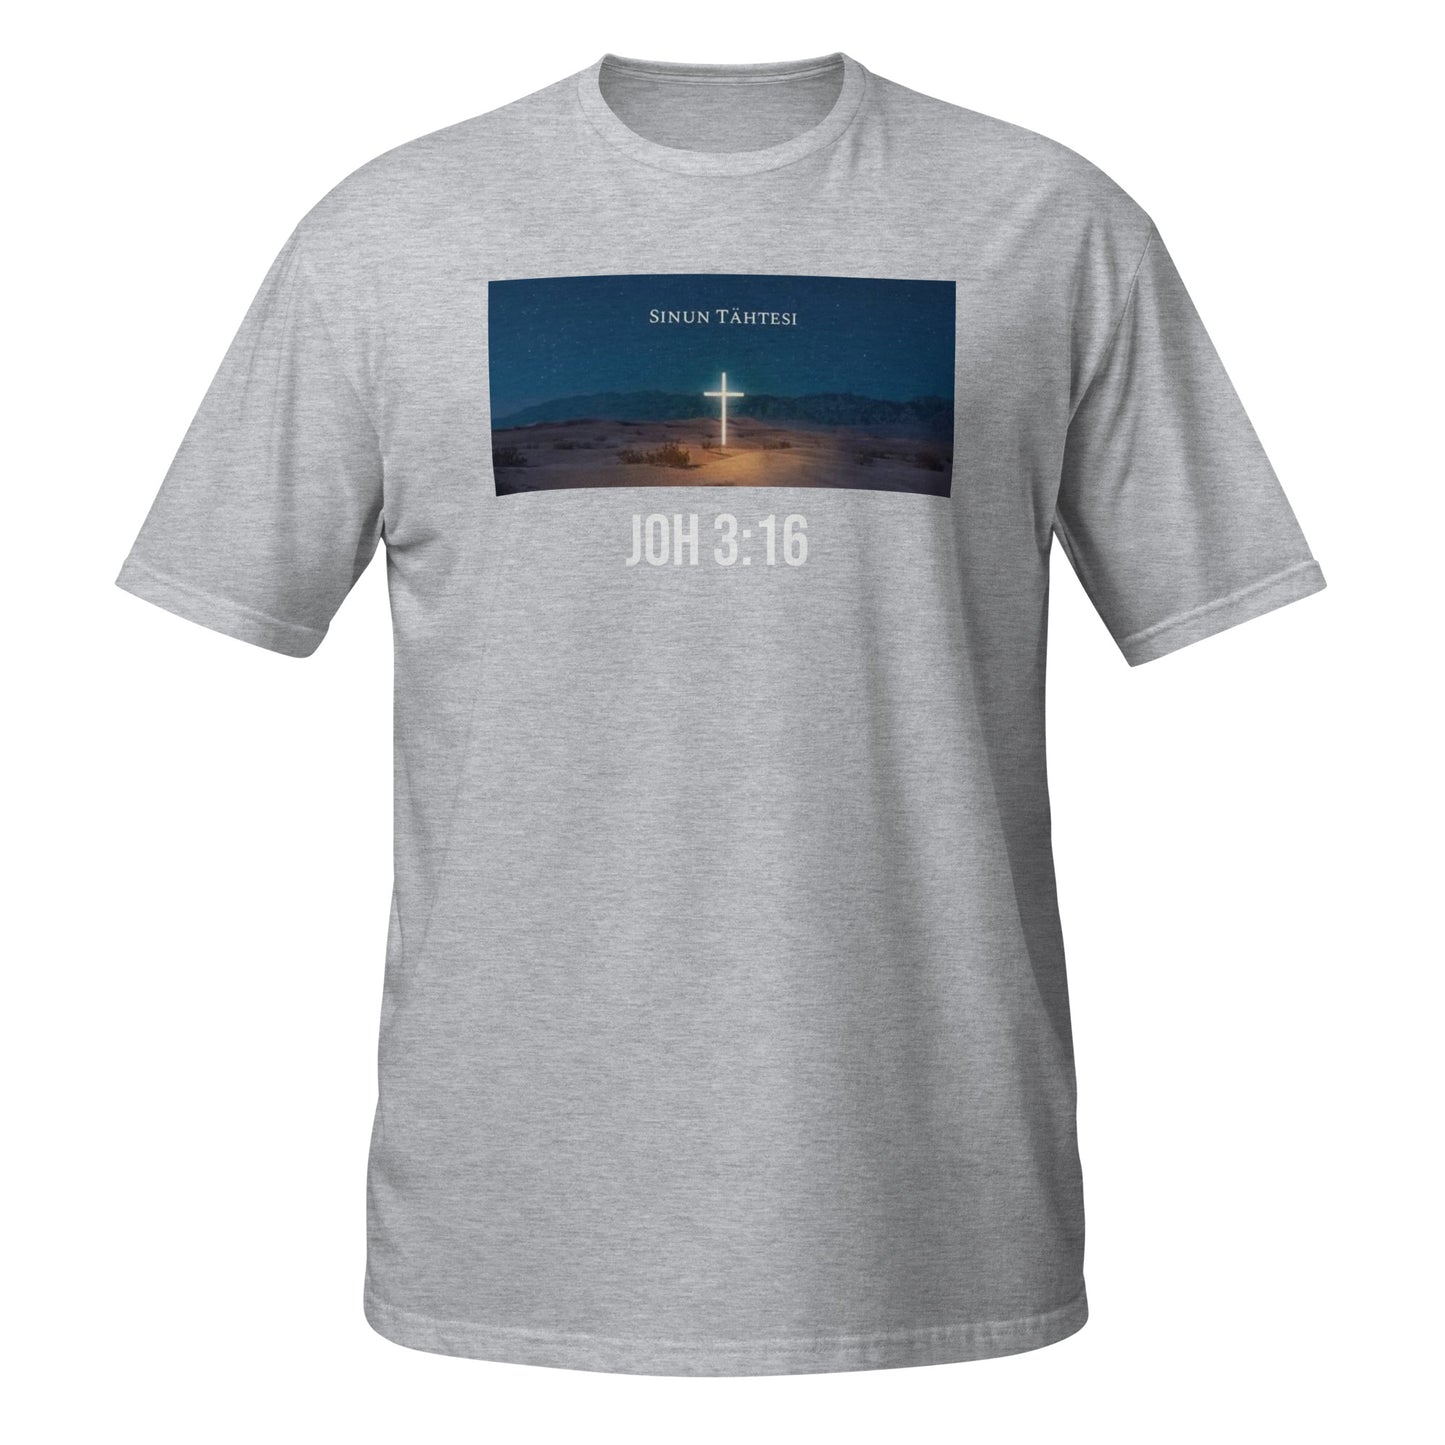 "JOHN 3:16" unisex t-shirt